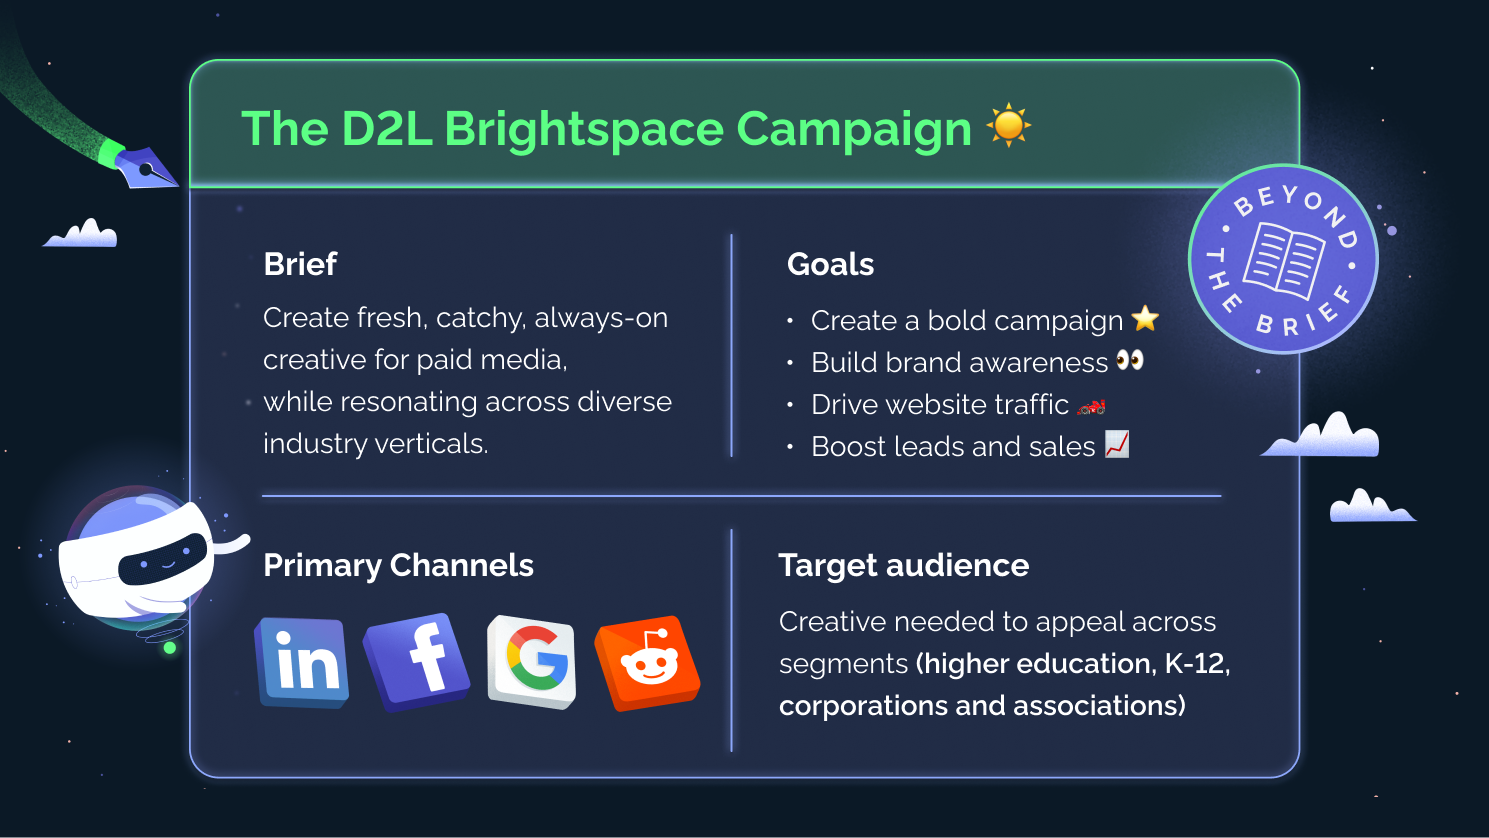 The D2L Brightspace Campaign